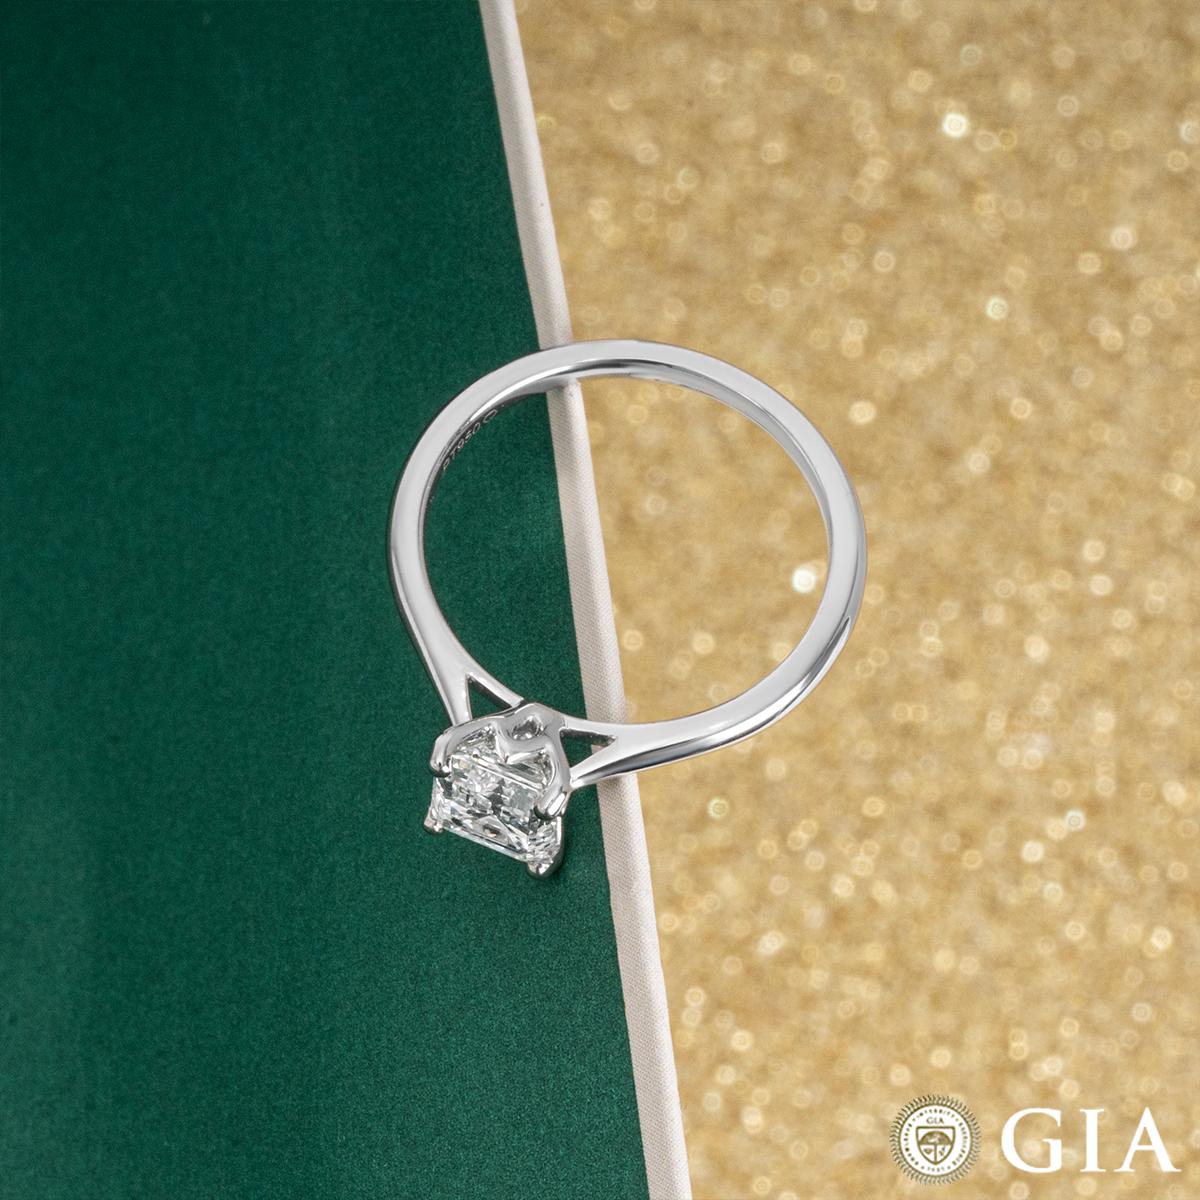 GIA Certified Platinum Emerald Cut Diamond Engagement Ring 1.03Carat E/VVS2 For Sale 2